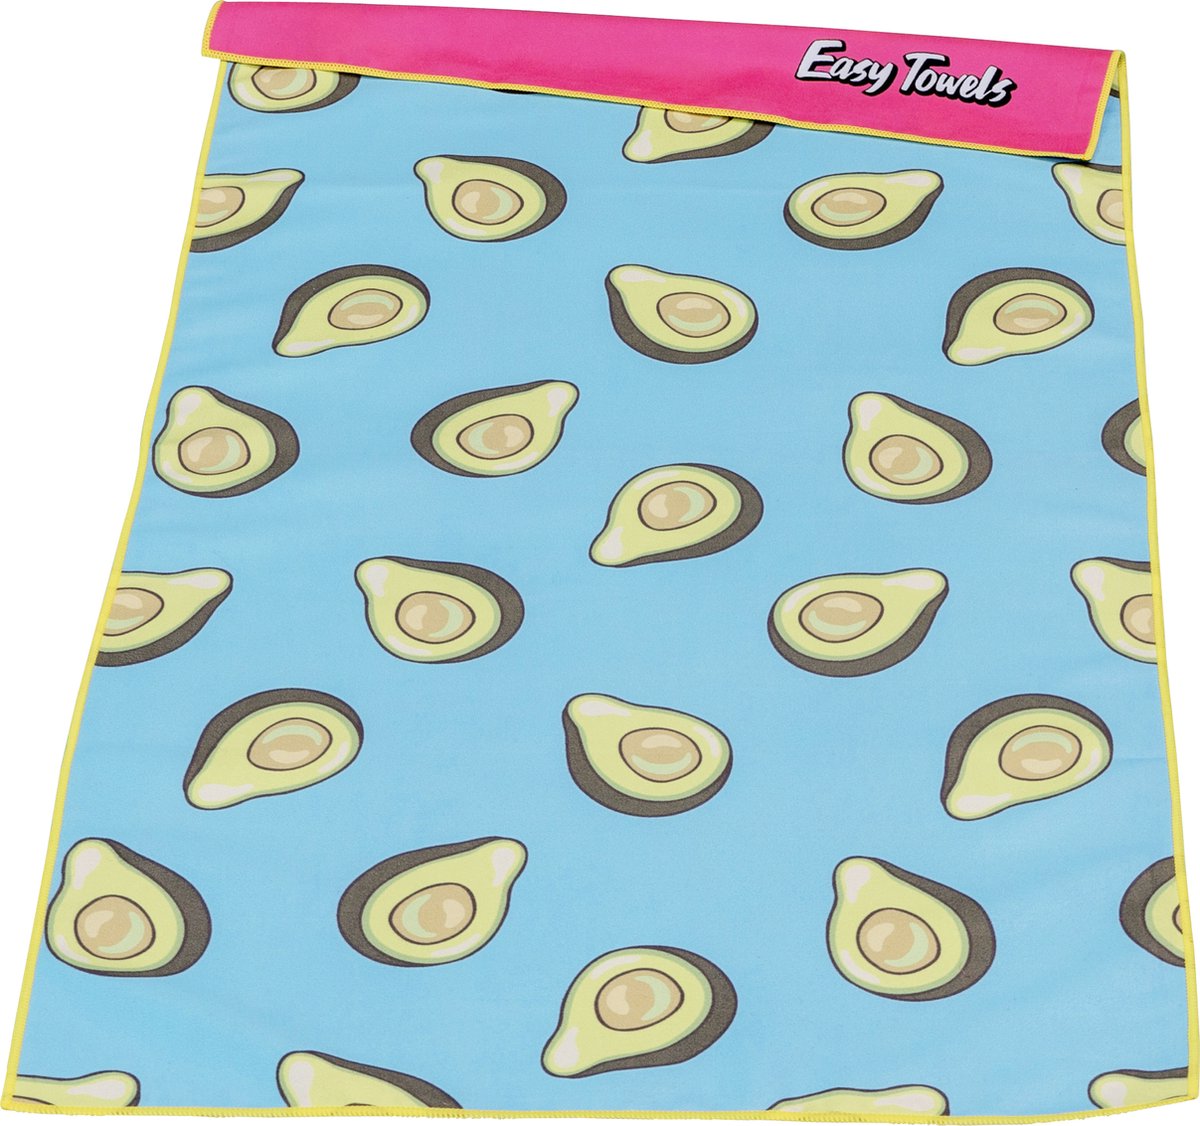 Easy Towels - Sporthanddoek Fitness - Microvezel - Avocado Print